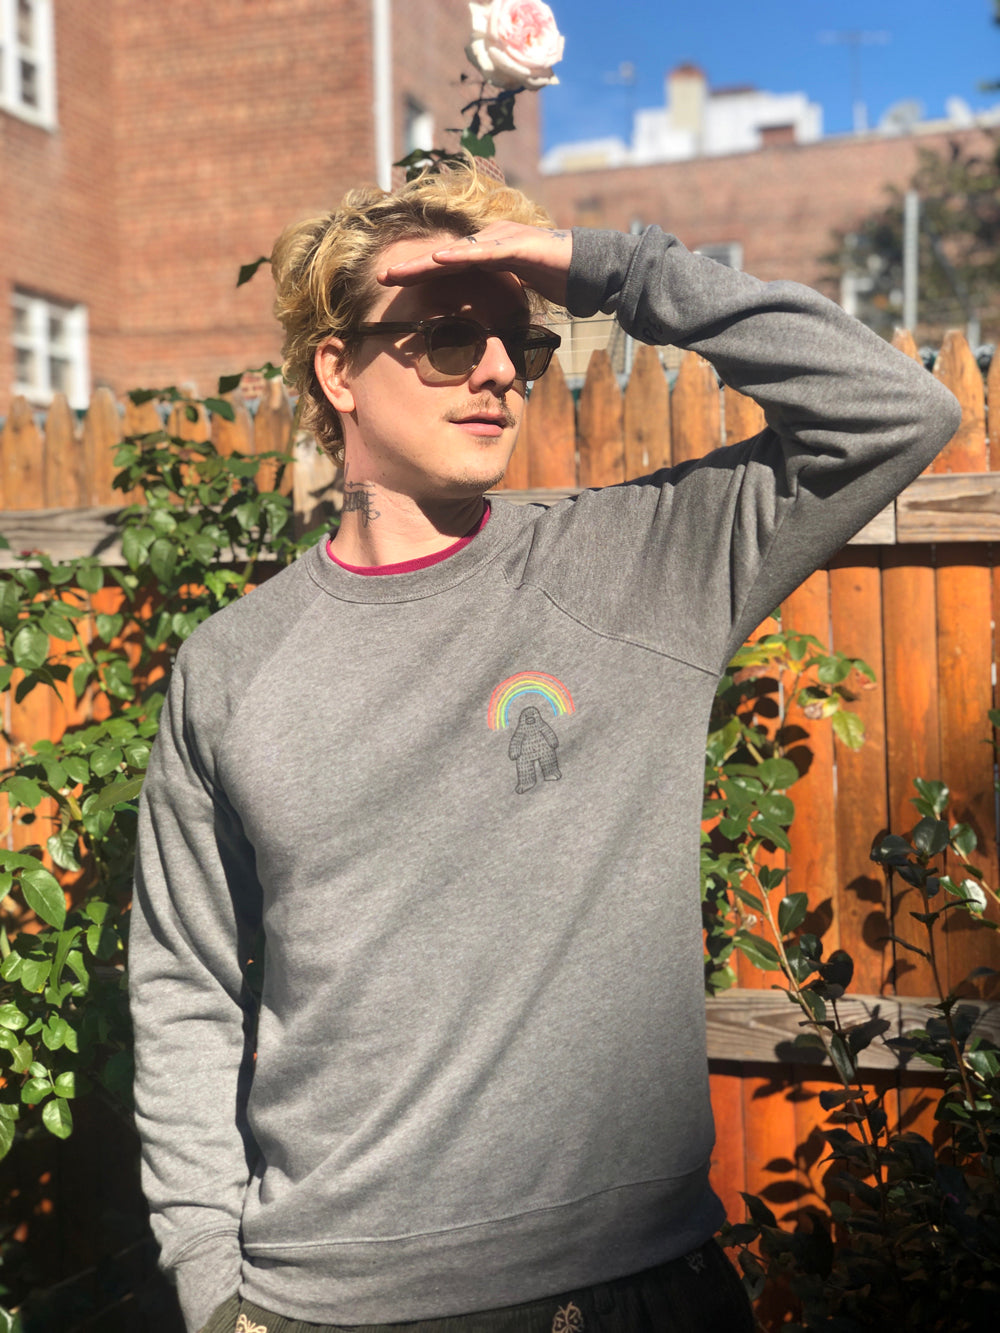 Go Ape - Rainbow Embroidered Crewneck Sweatshirt